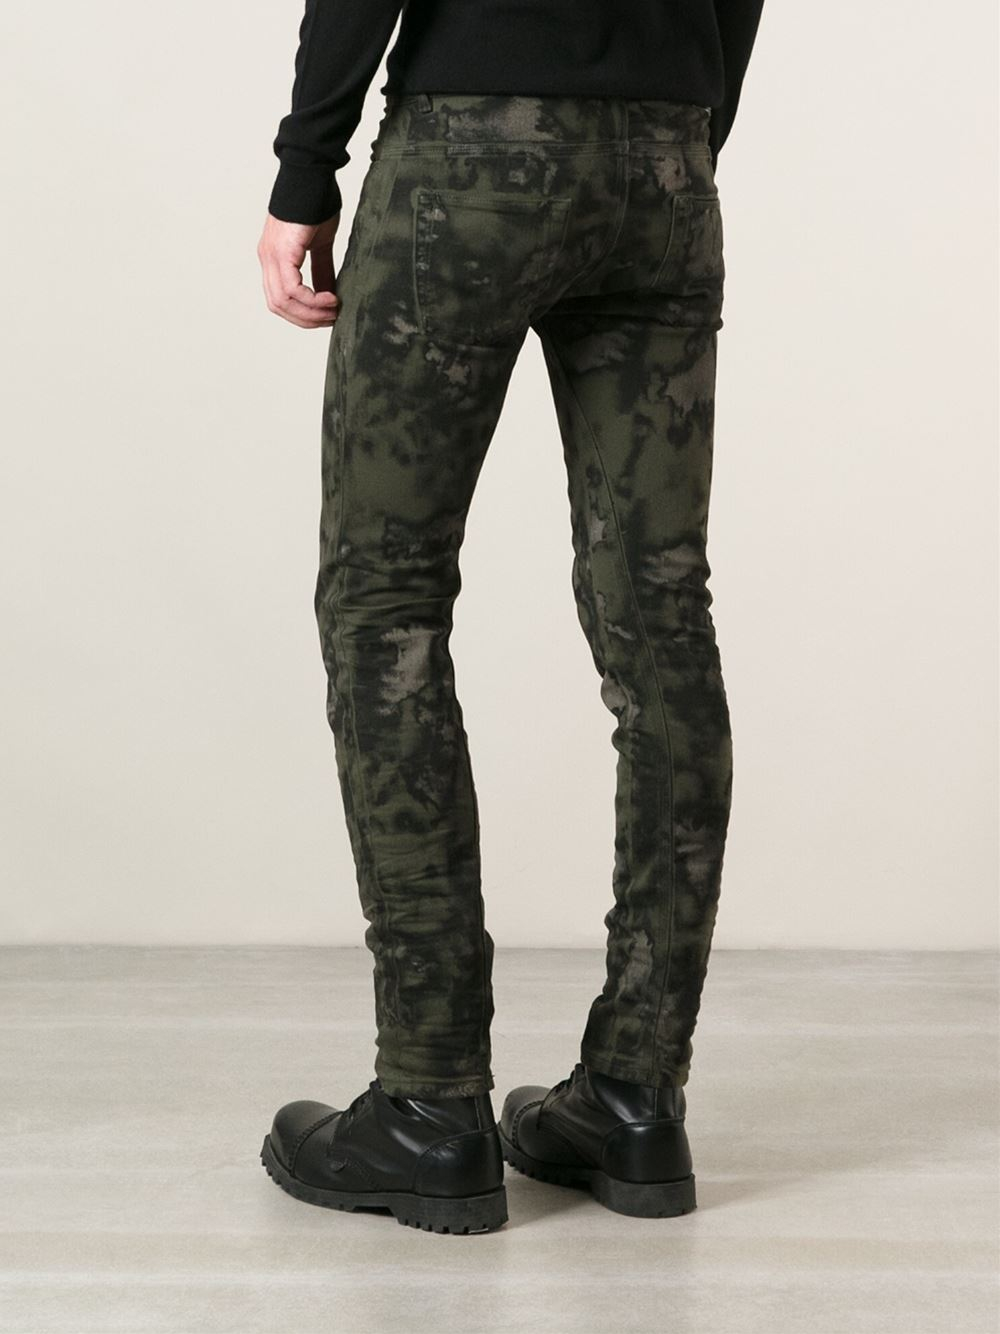 Diesel Black Gold Camouflage Skinny Jeans in Green for Men - Lyst